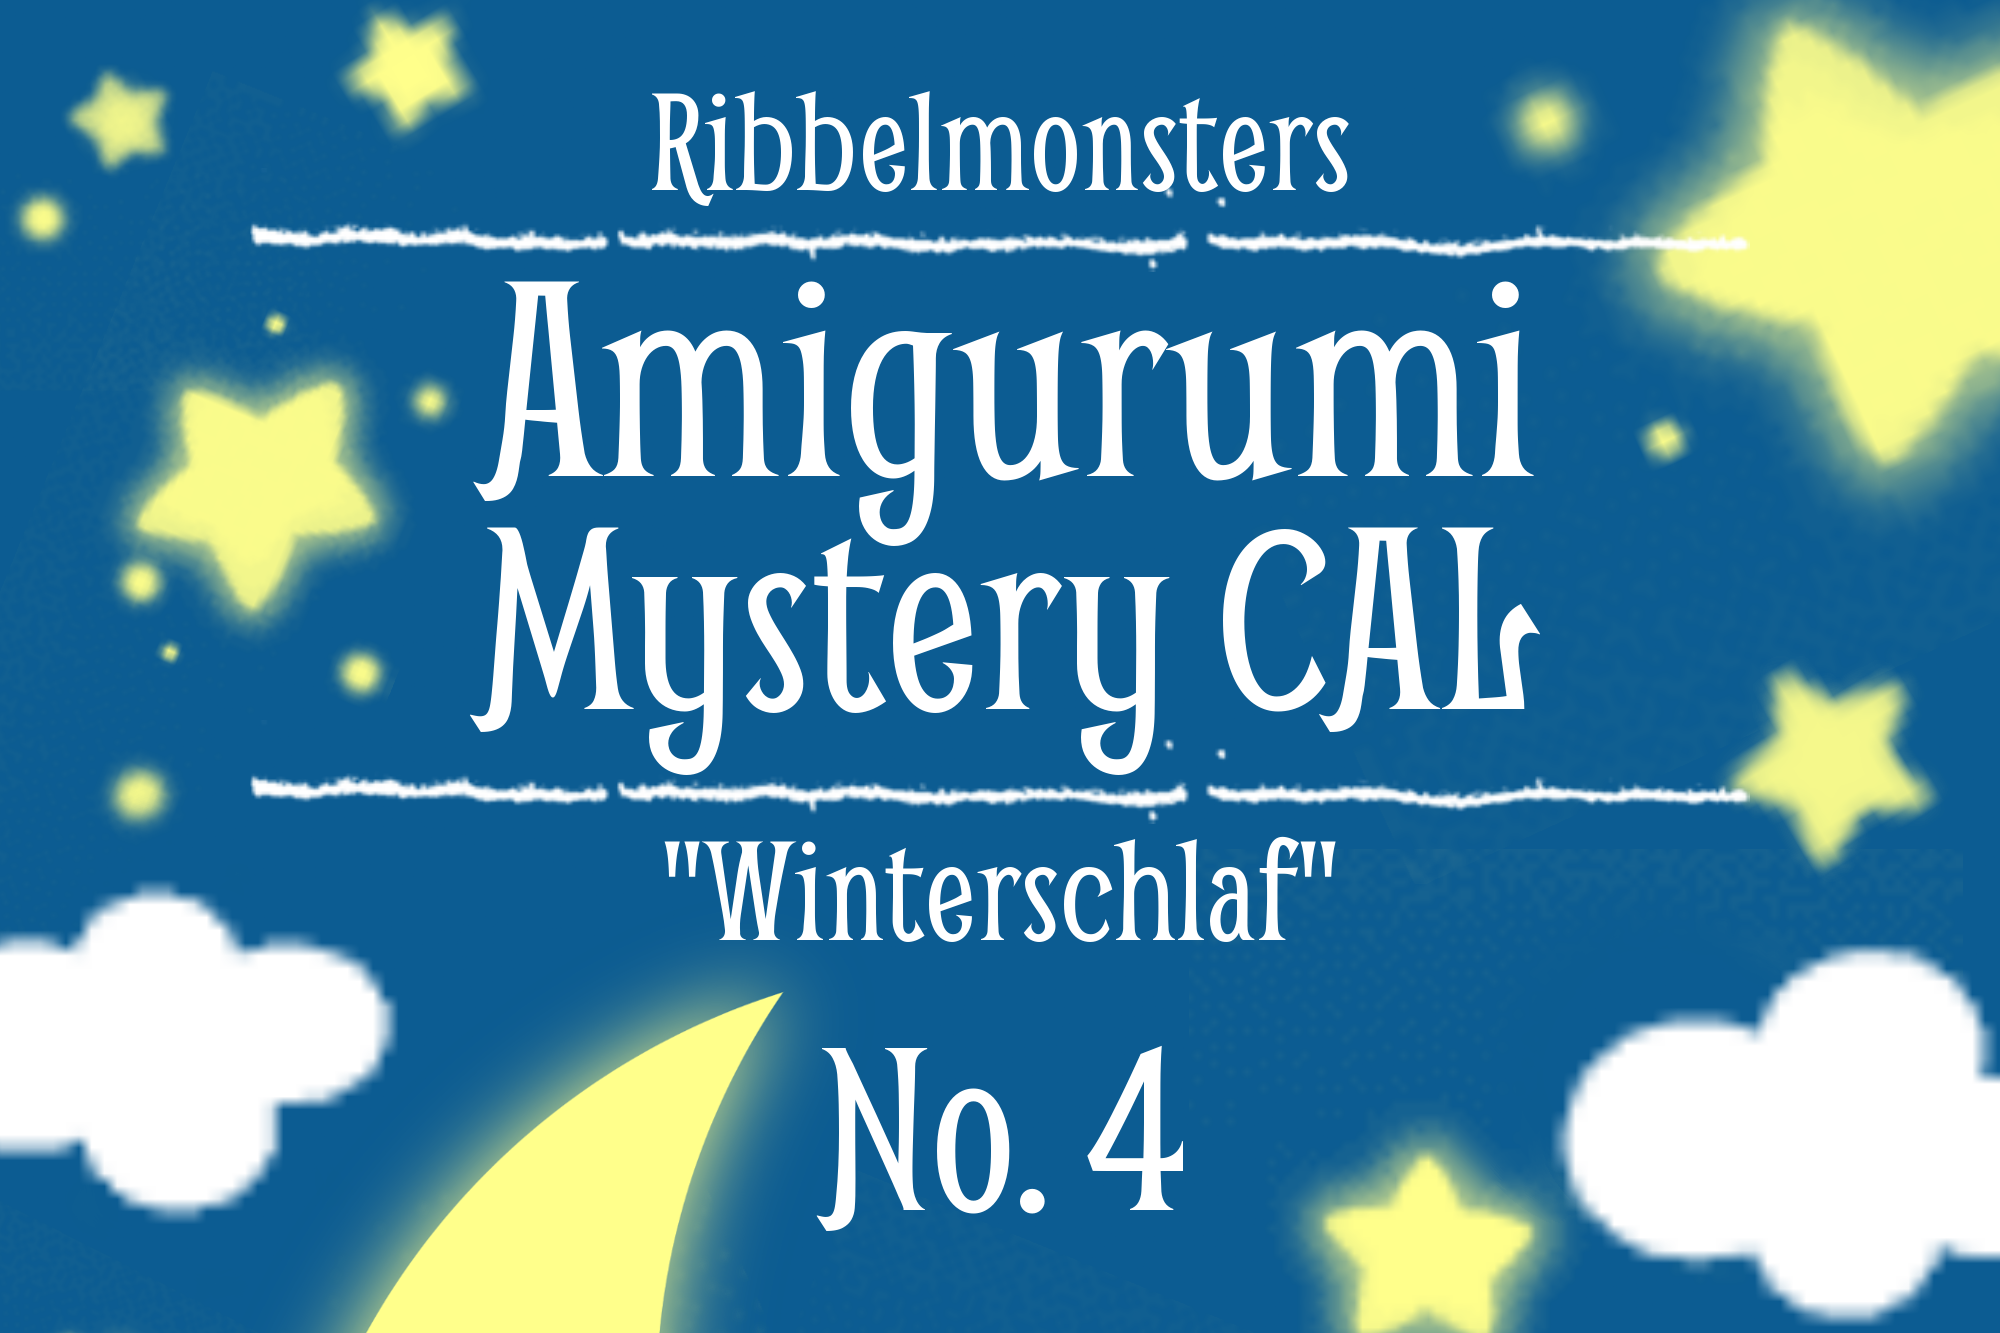 Amigurumi Mystery CAL – “Hibernation” – Part 4